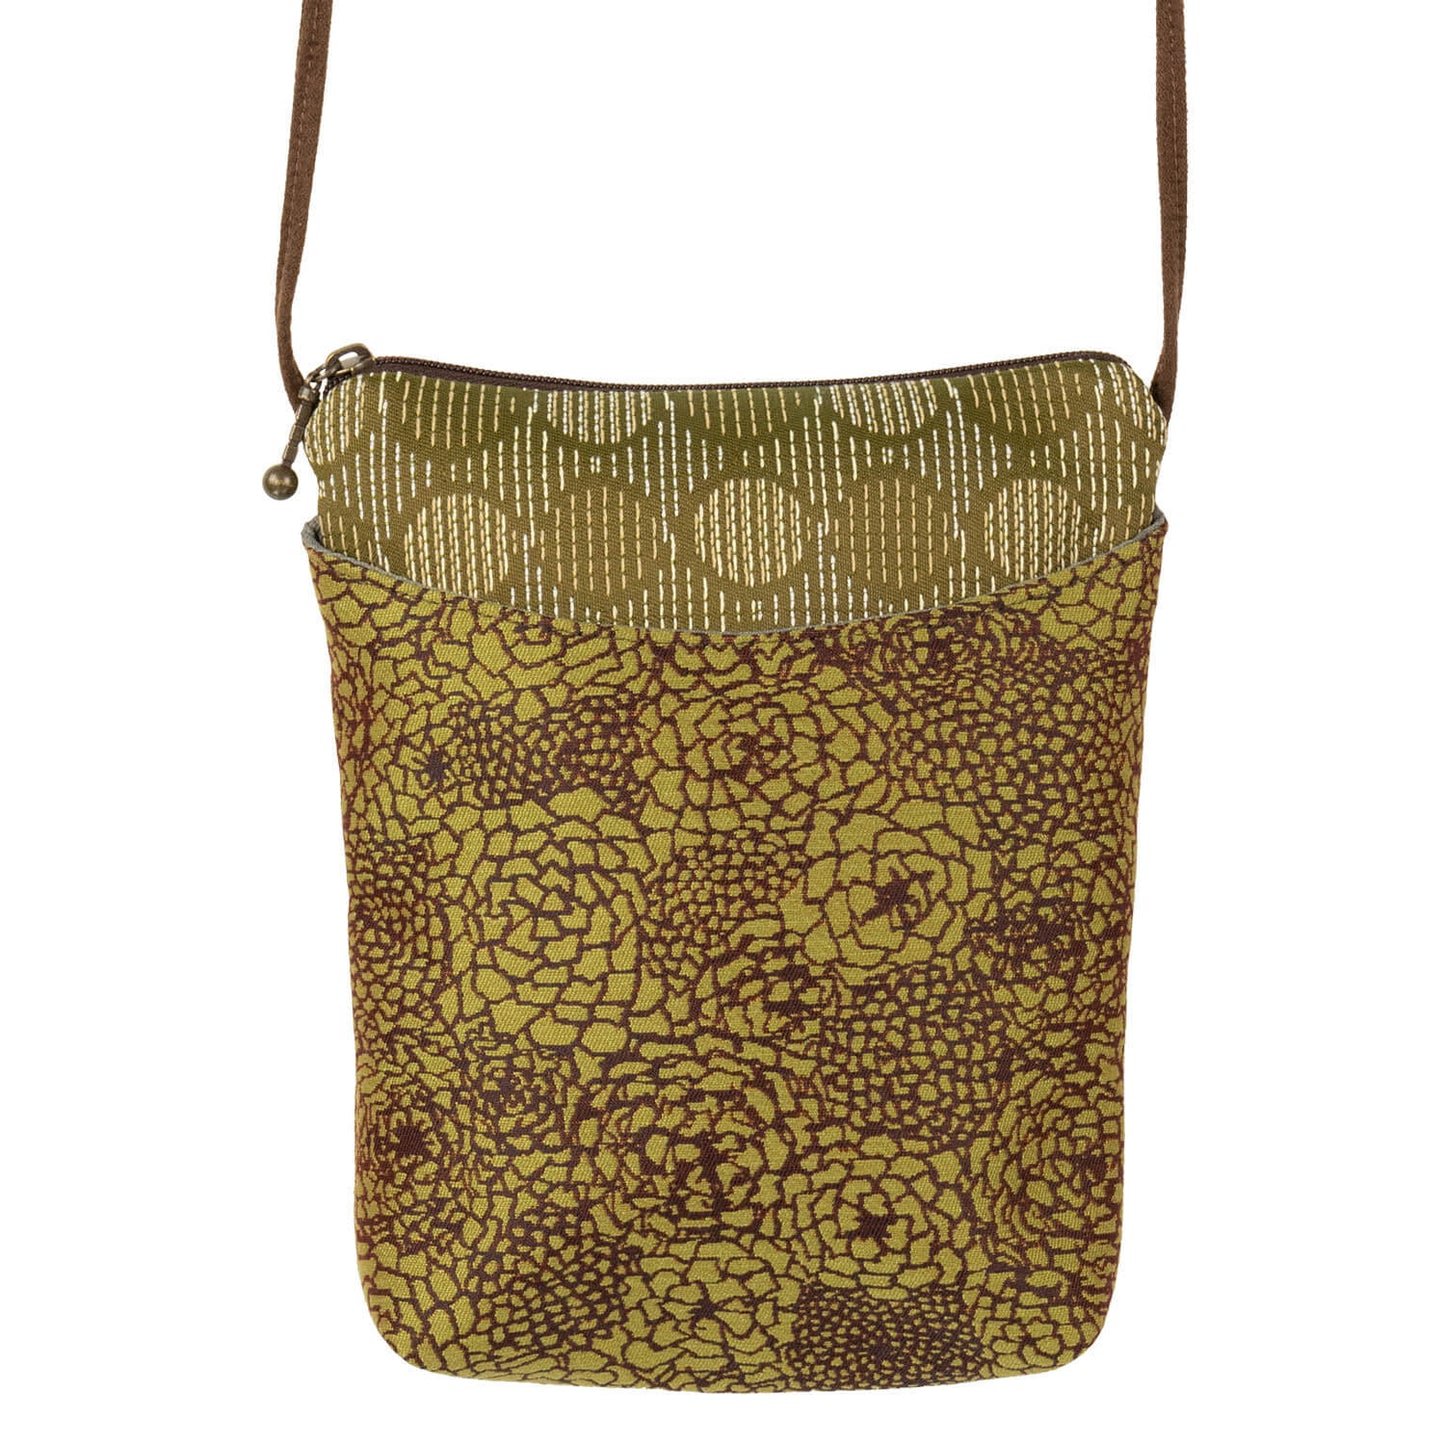 Busy Bee Bag in Stellar Olive by Maruca Designs